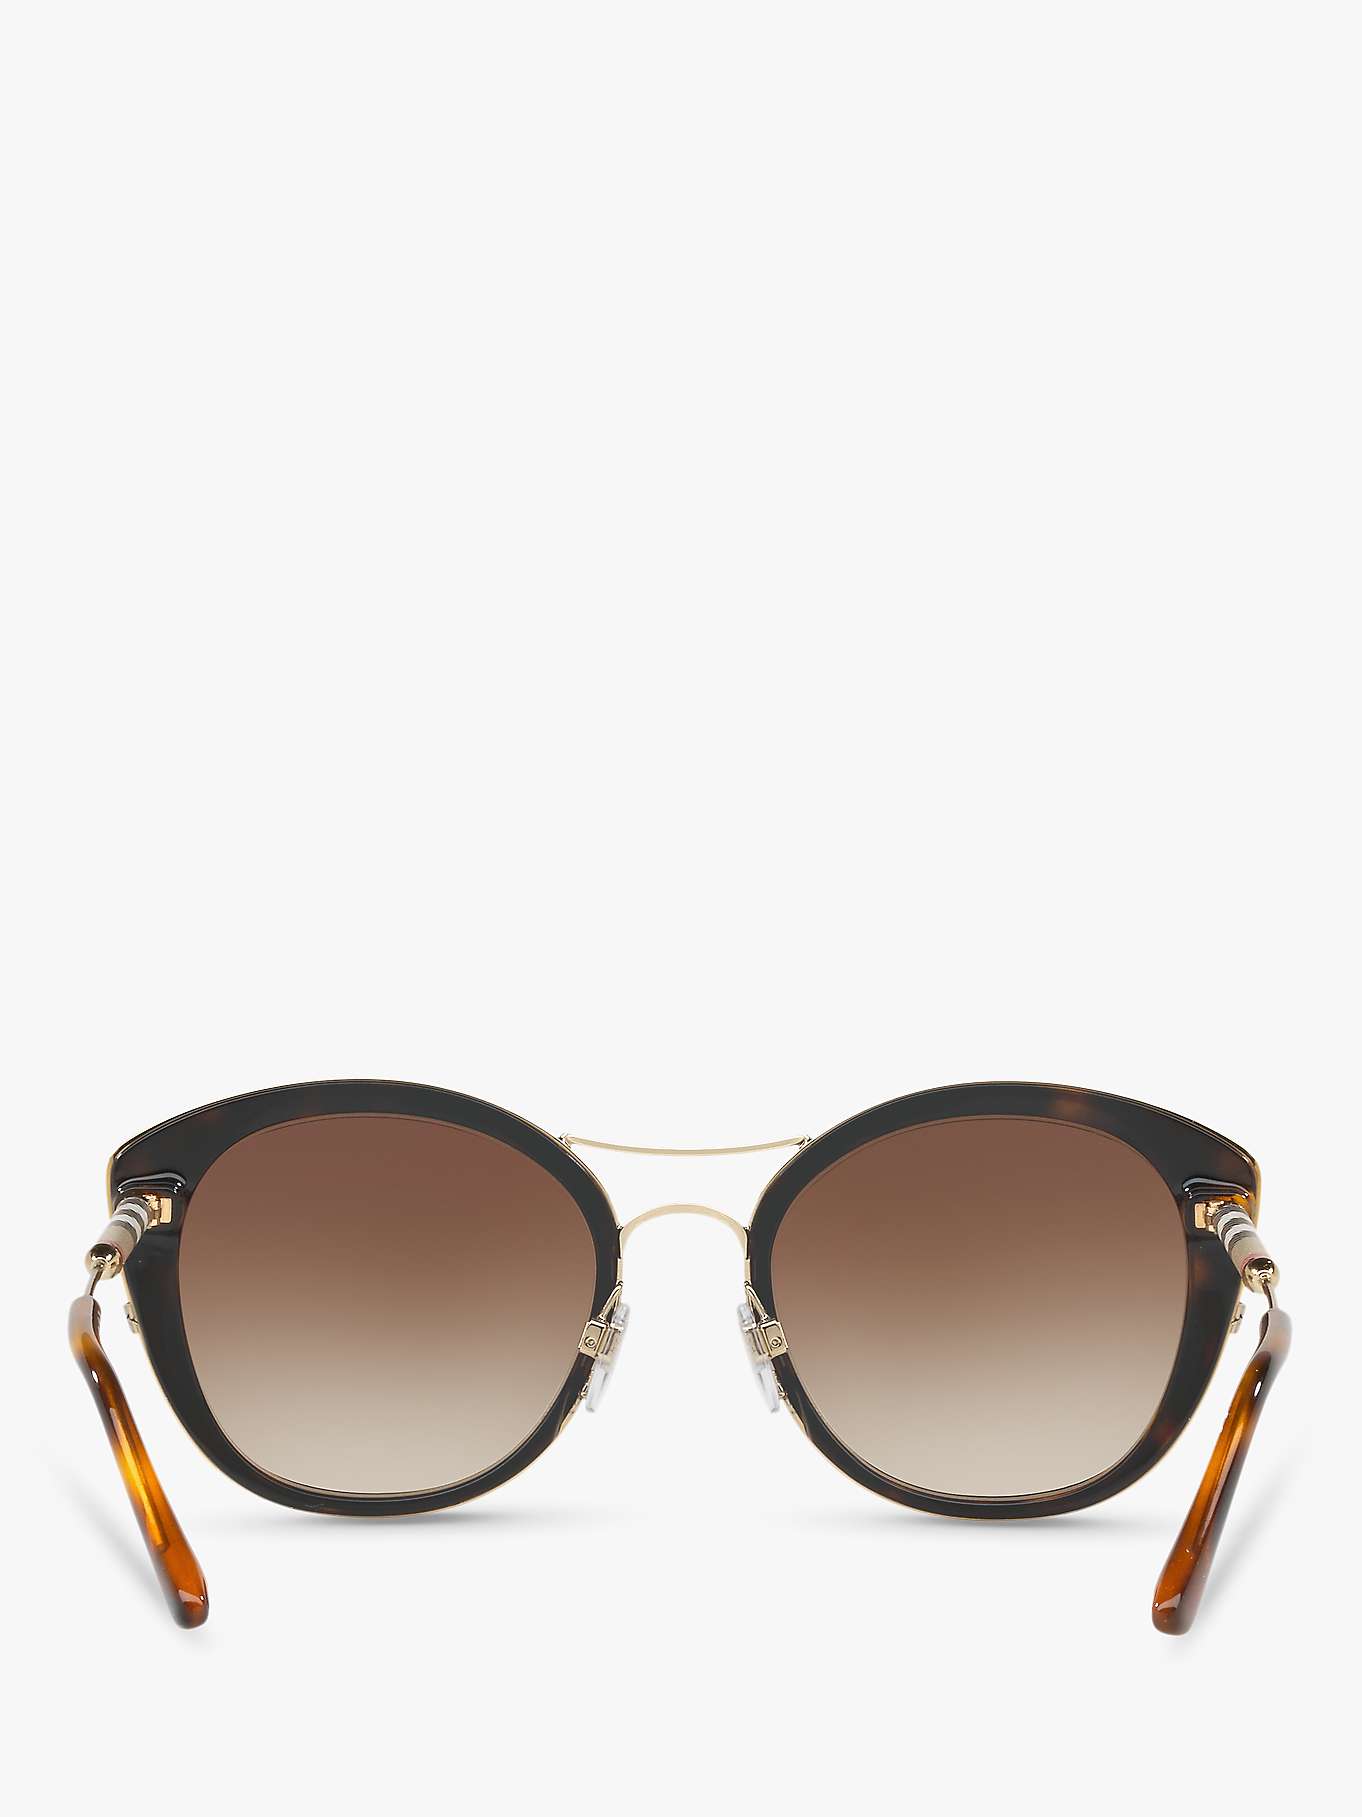 Buy Burberry BE4251Q Women's Round Sunglasses Online at johnlewis.com